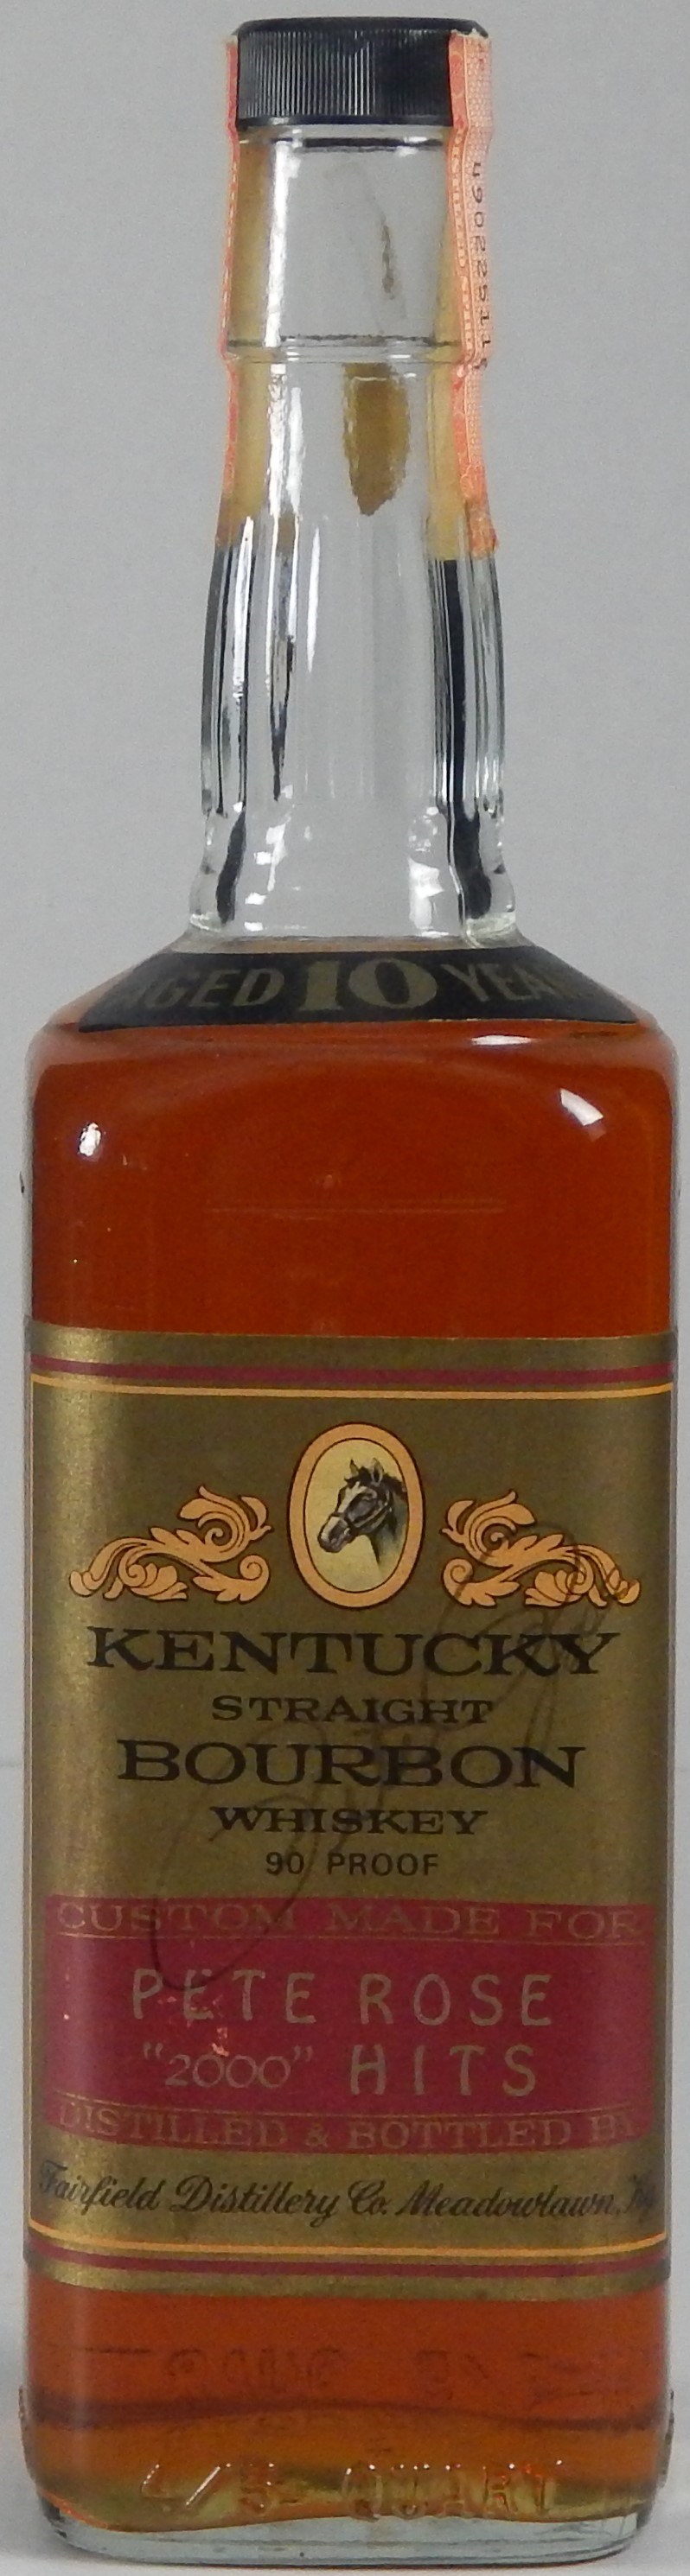 Pete Rose 2000th Hit Bourbon Whiskey Bottle.  Very Rare.